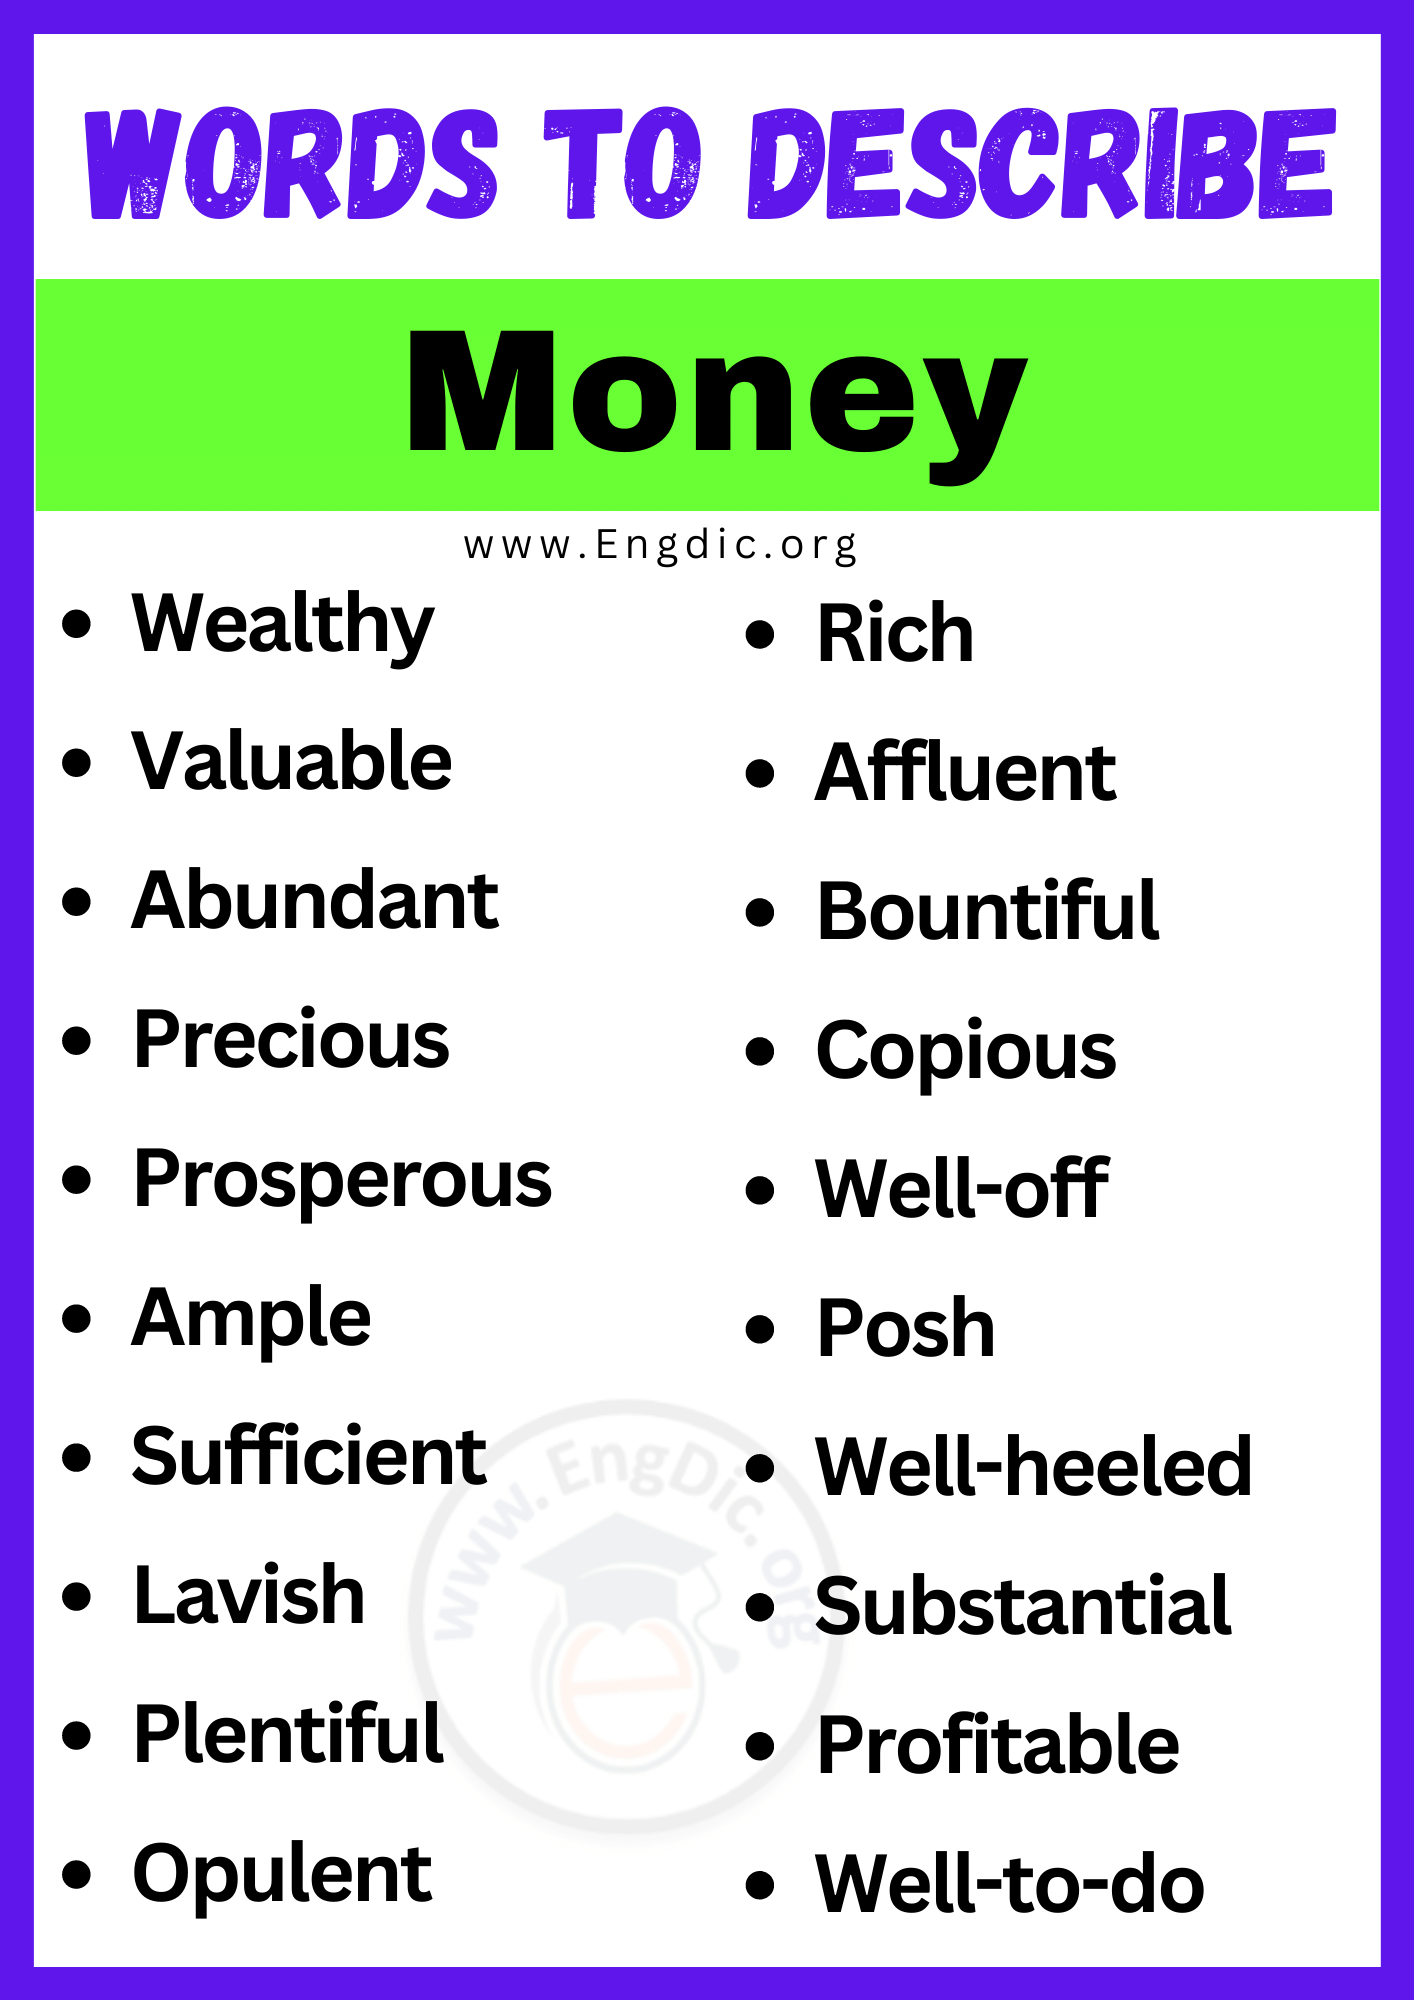 Words to Describe Money